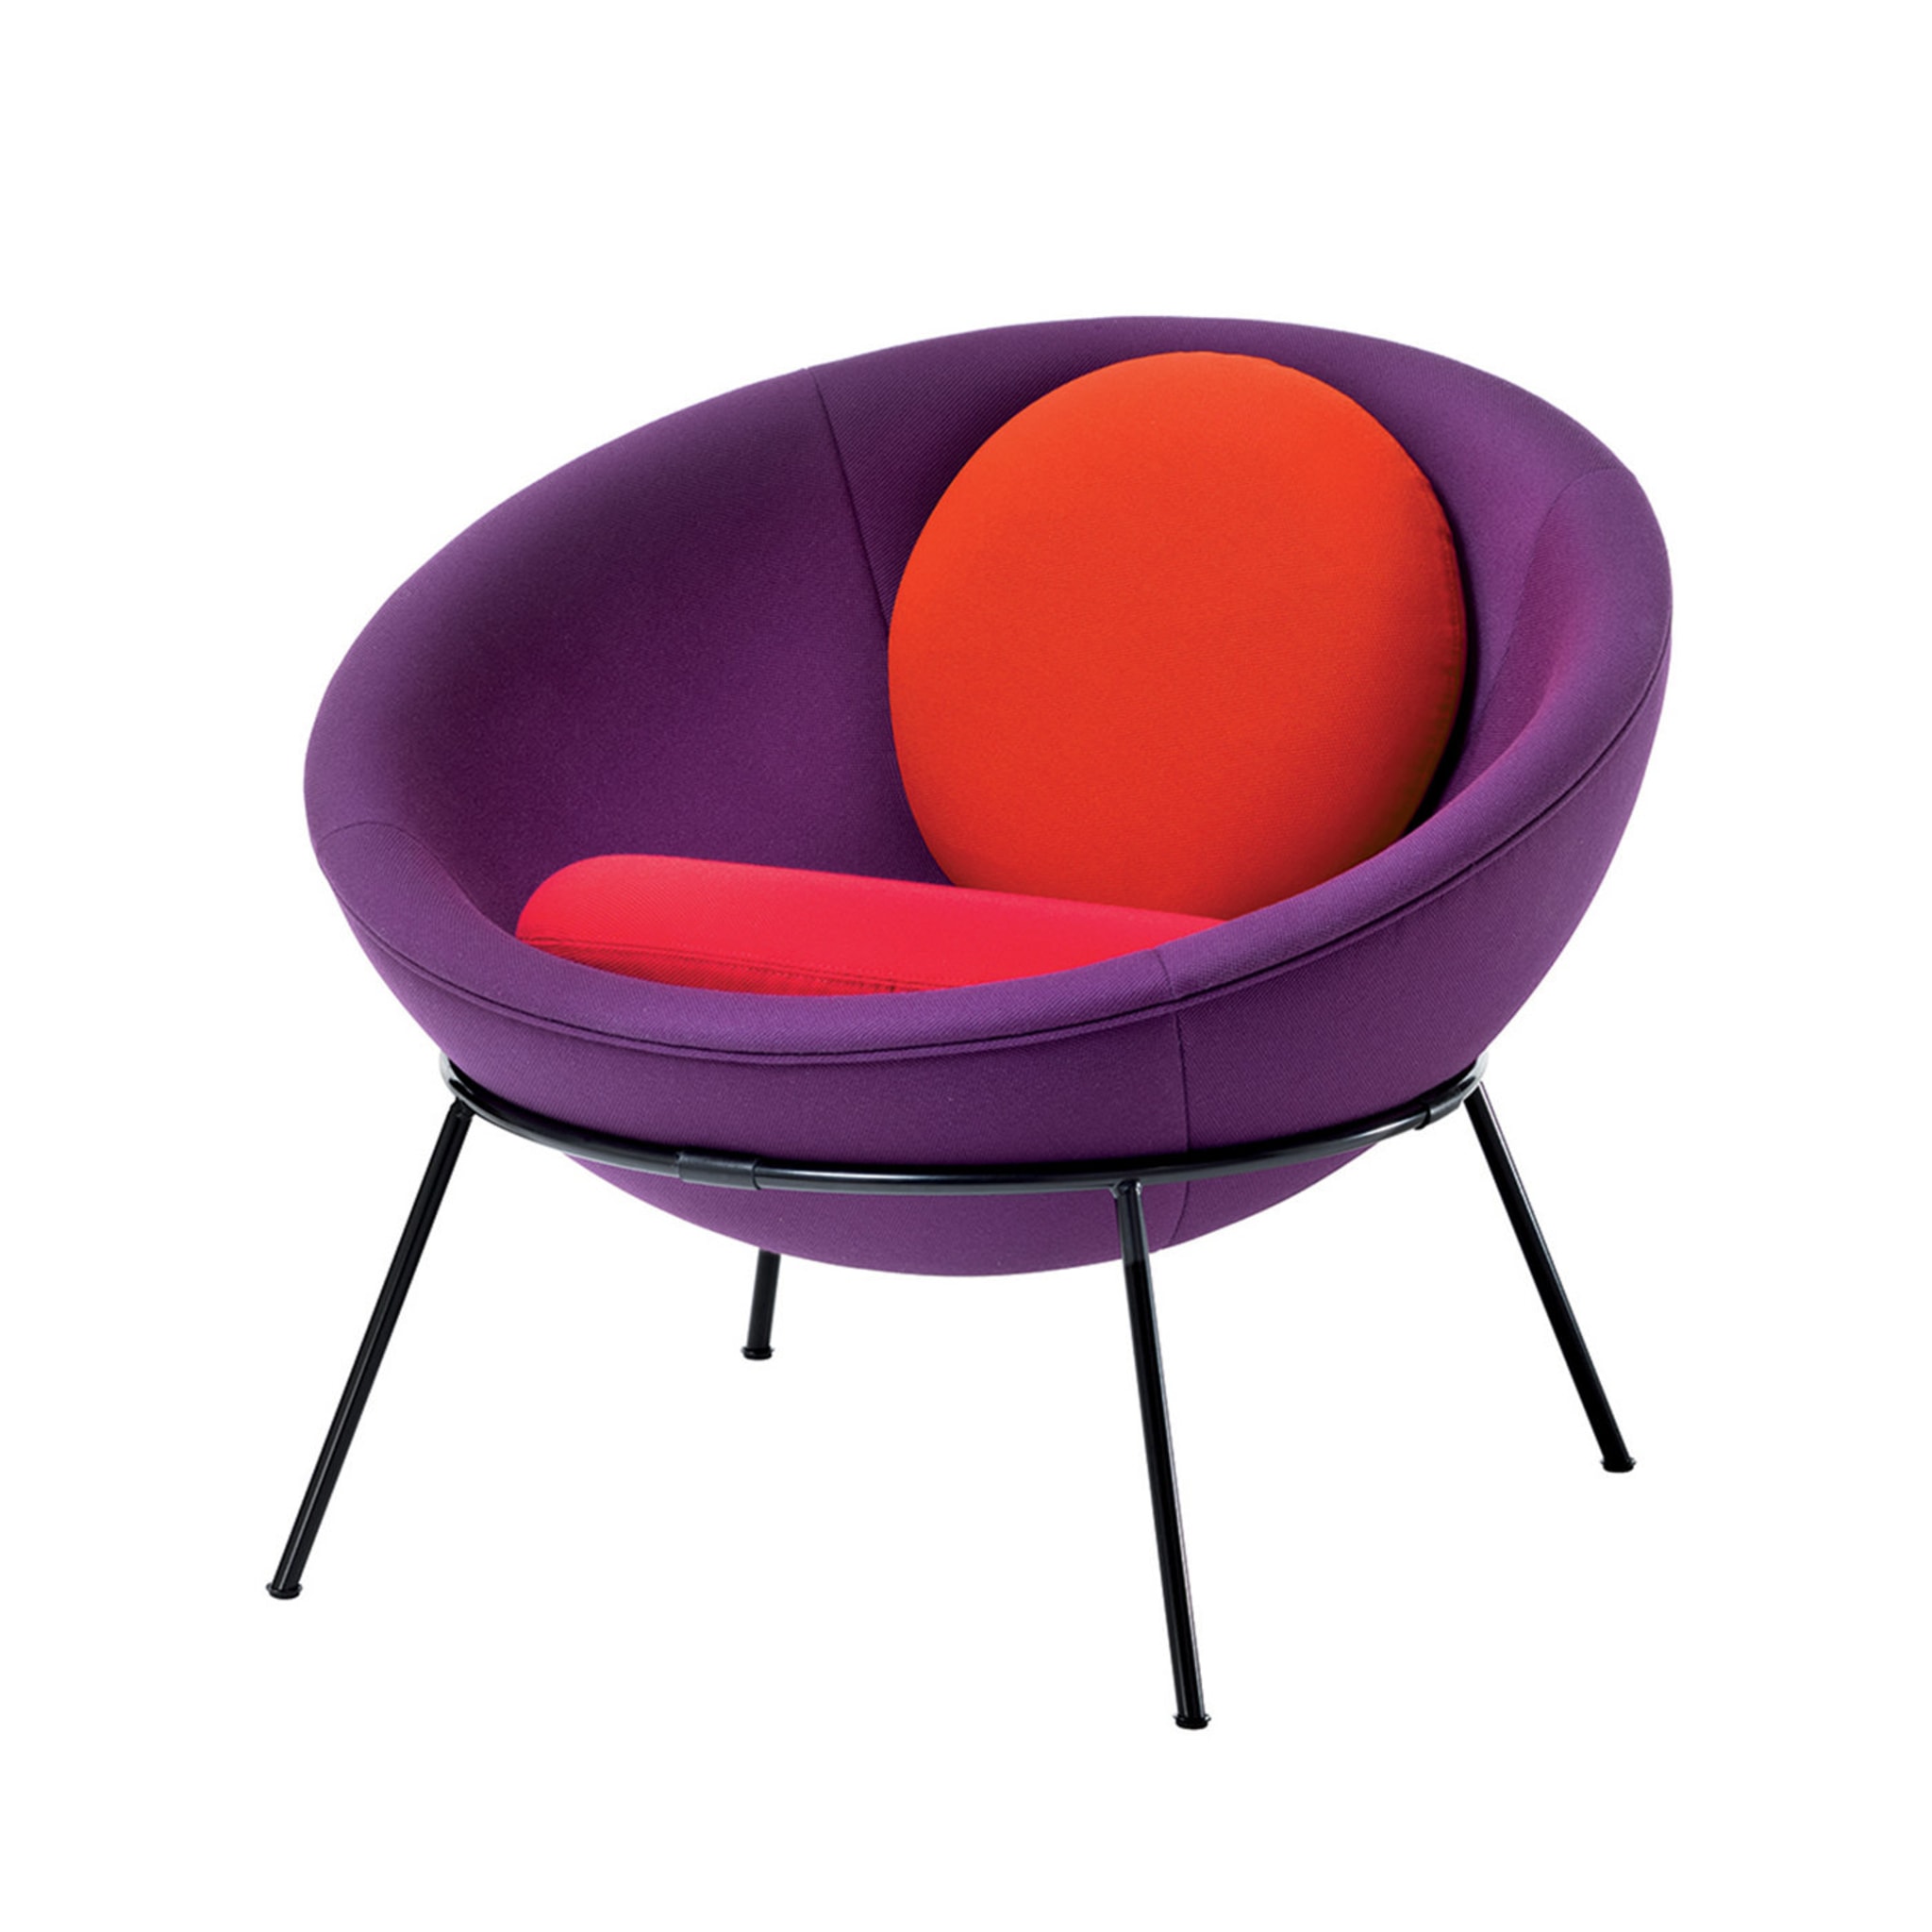 Bardi's Bowl Chair Purple Nuance - Alternative view 1